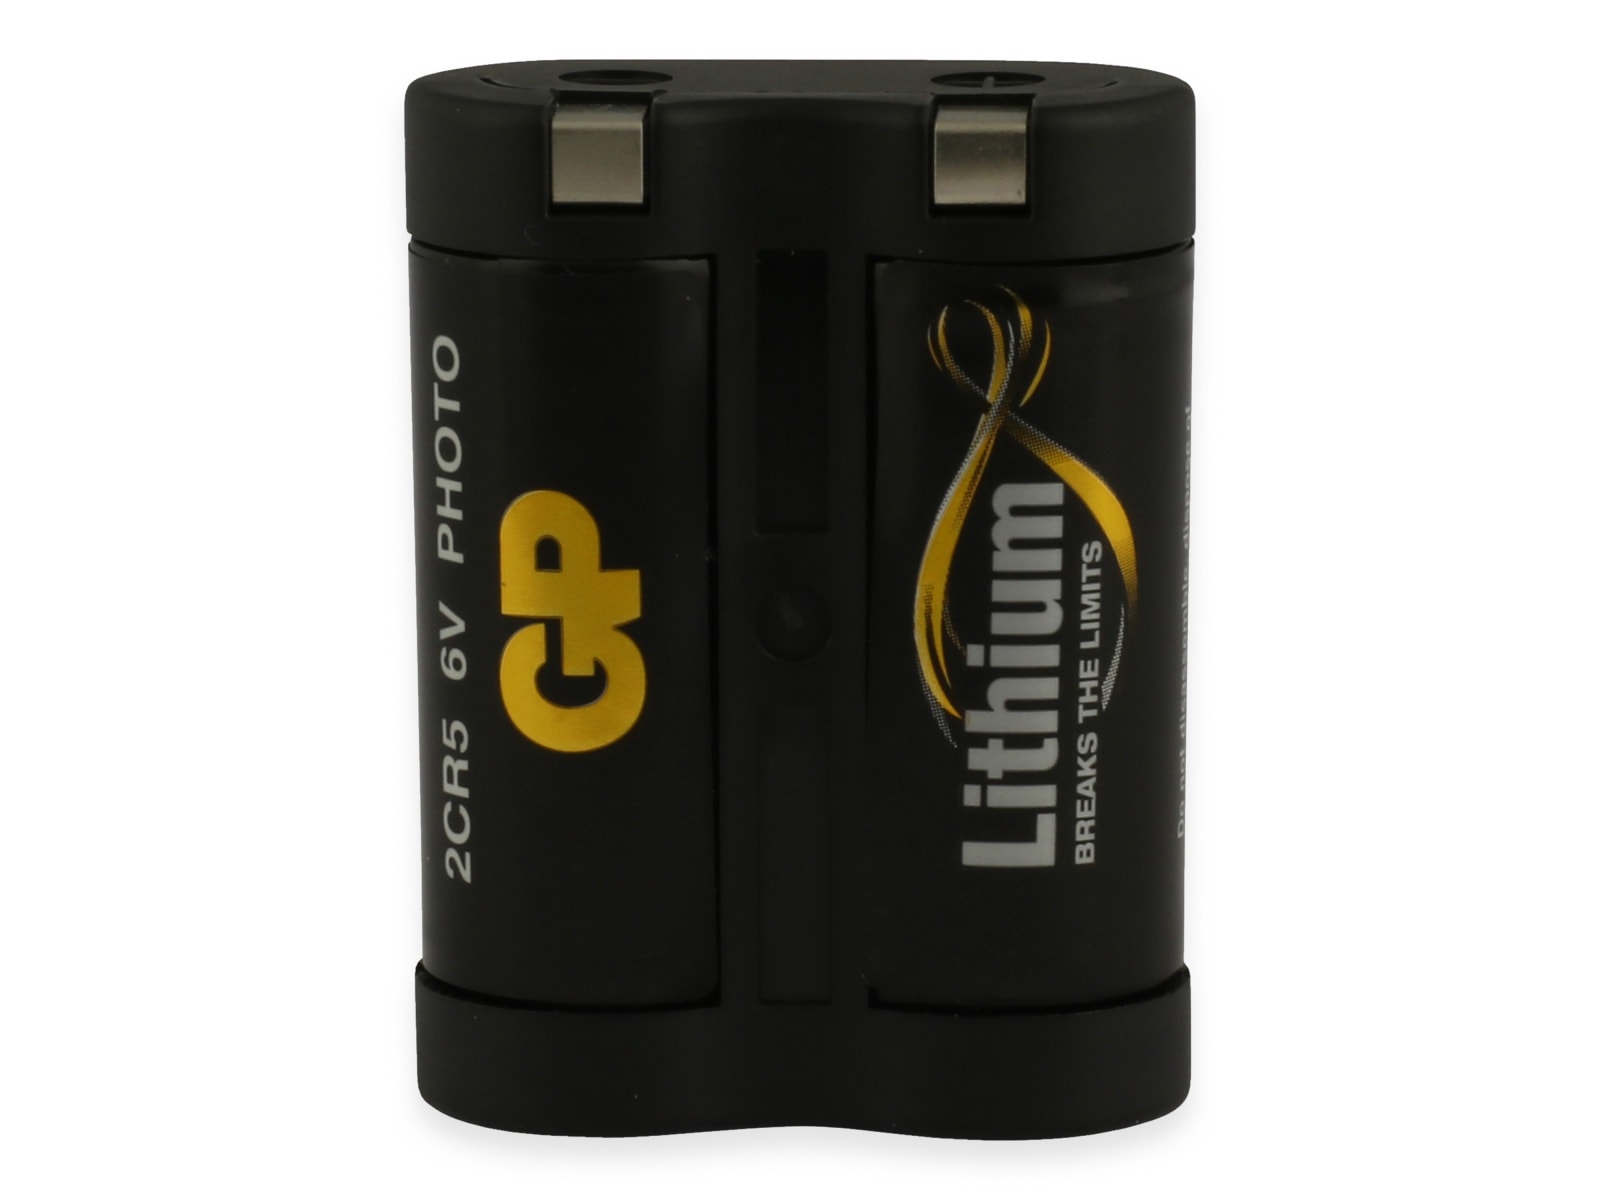 GP Lithium-Batterie 2CR5 1 Stück